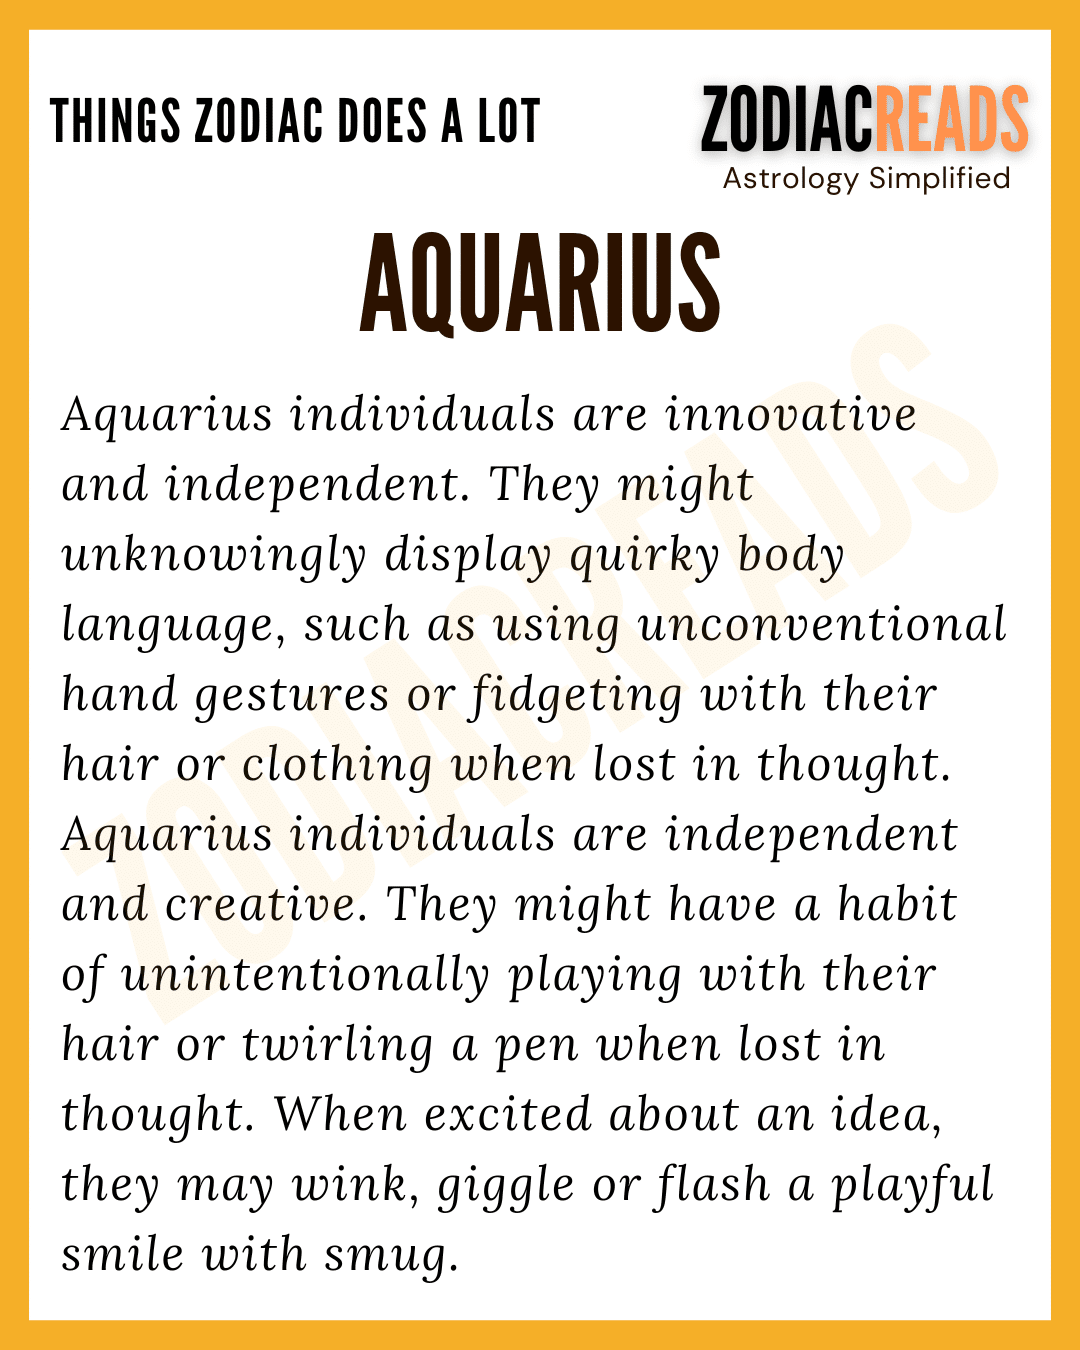 Aquarius Things That Zodiac Signs Tend To Do A Lot